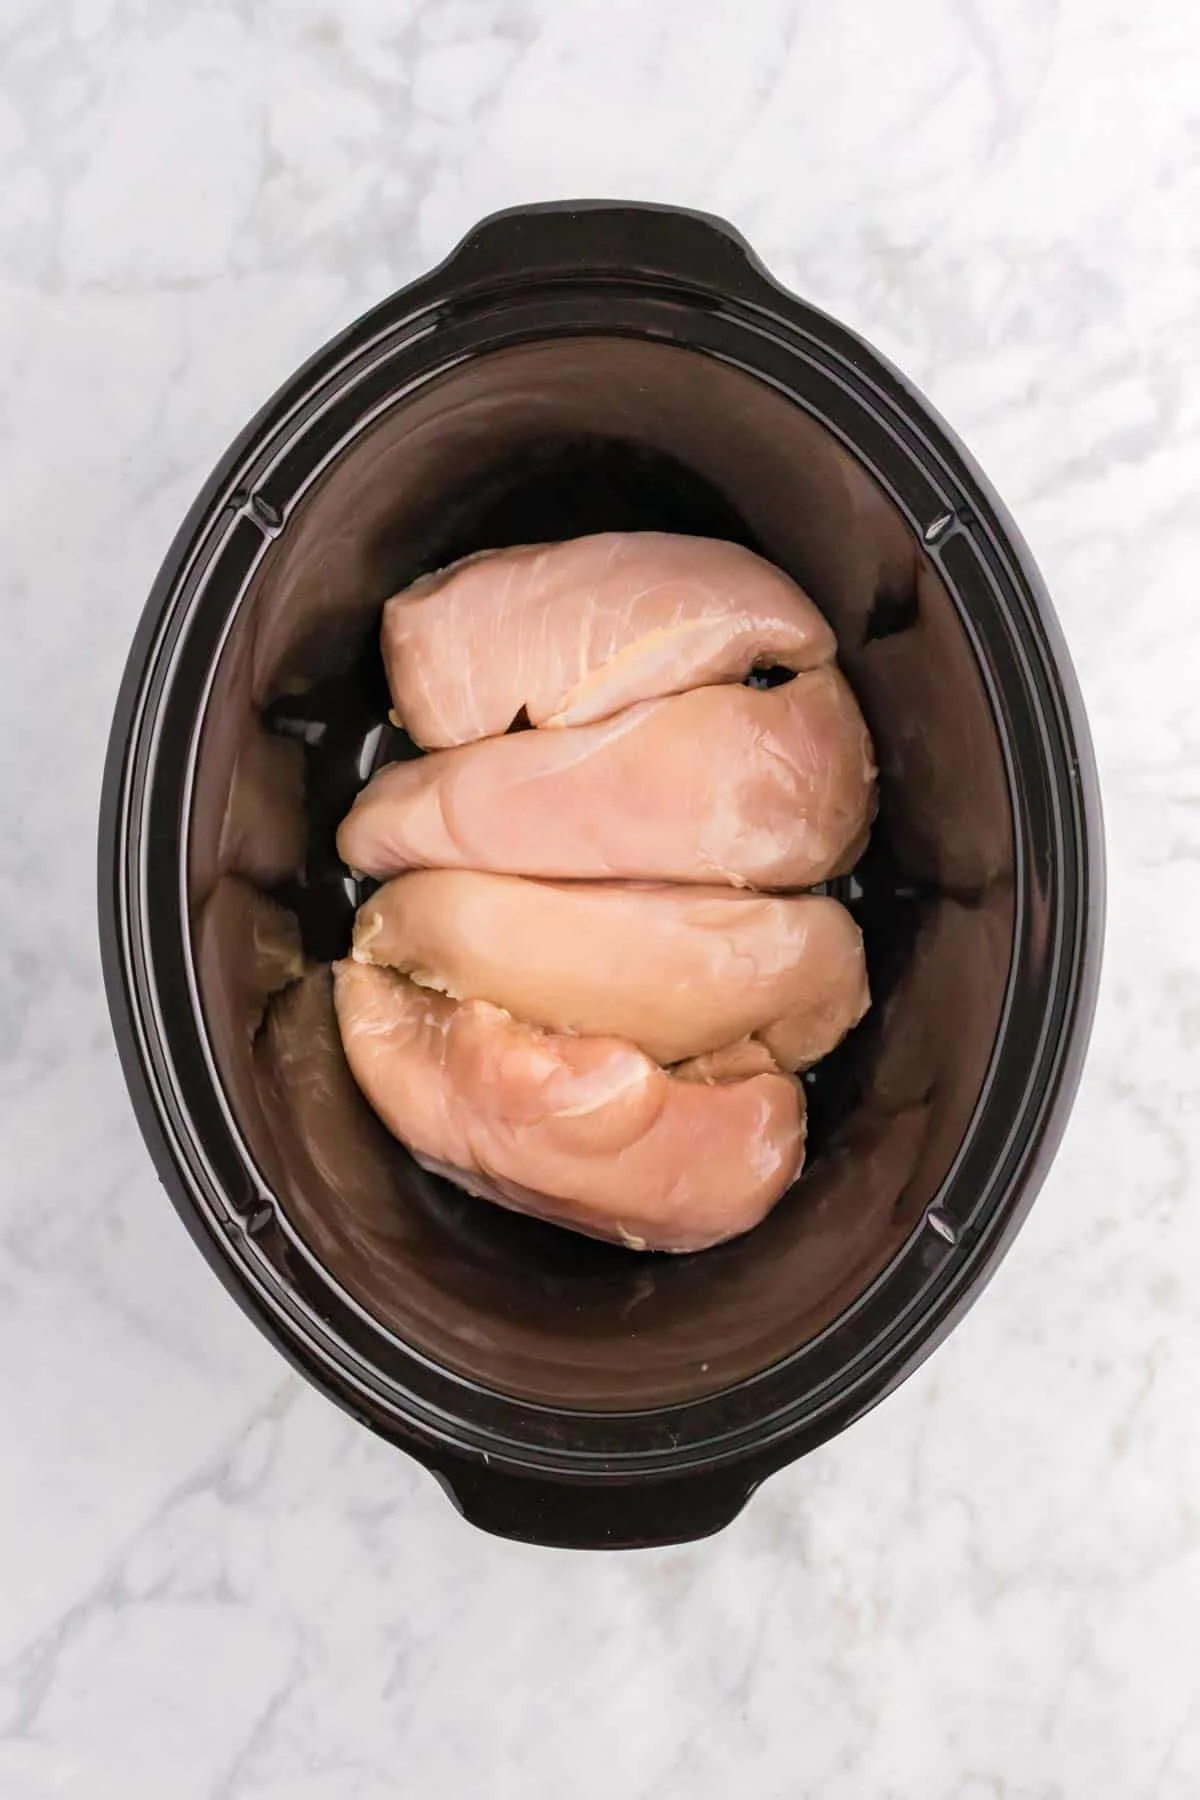 raw boneless, skinless chicken breasts in a Crock Pot